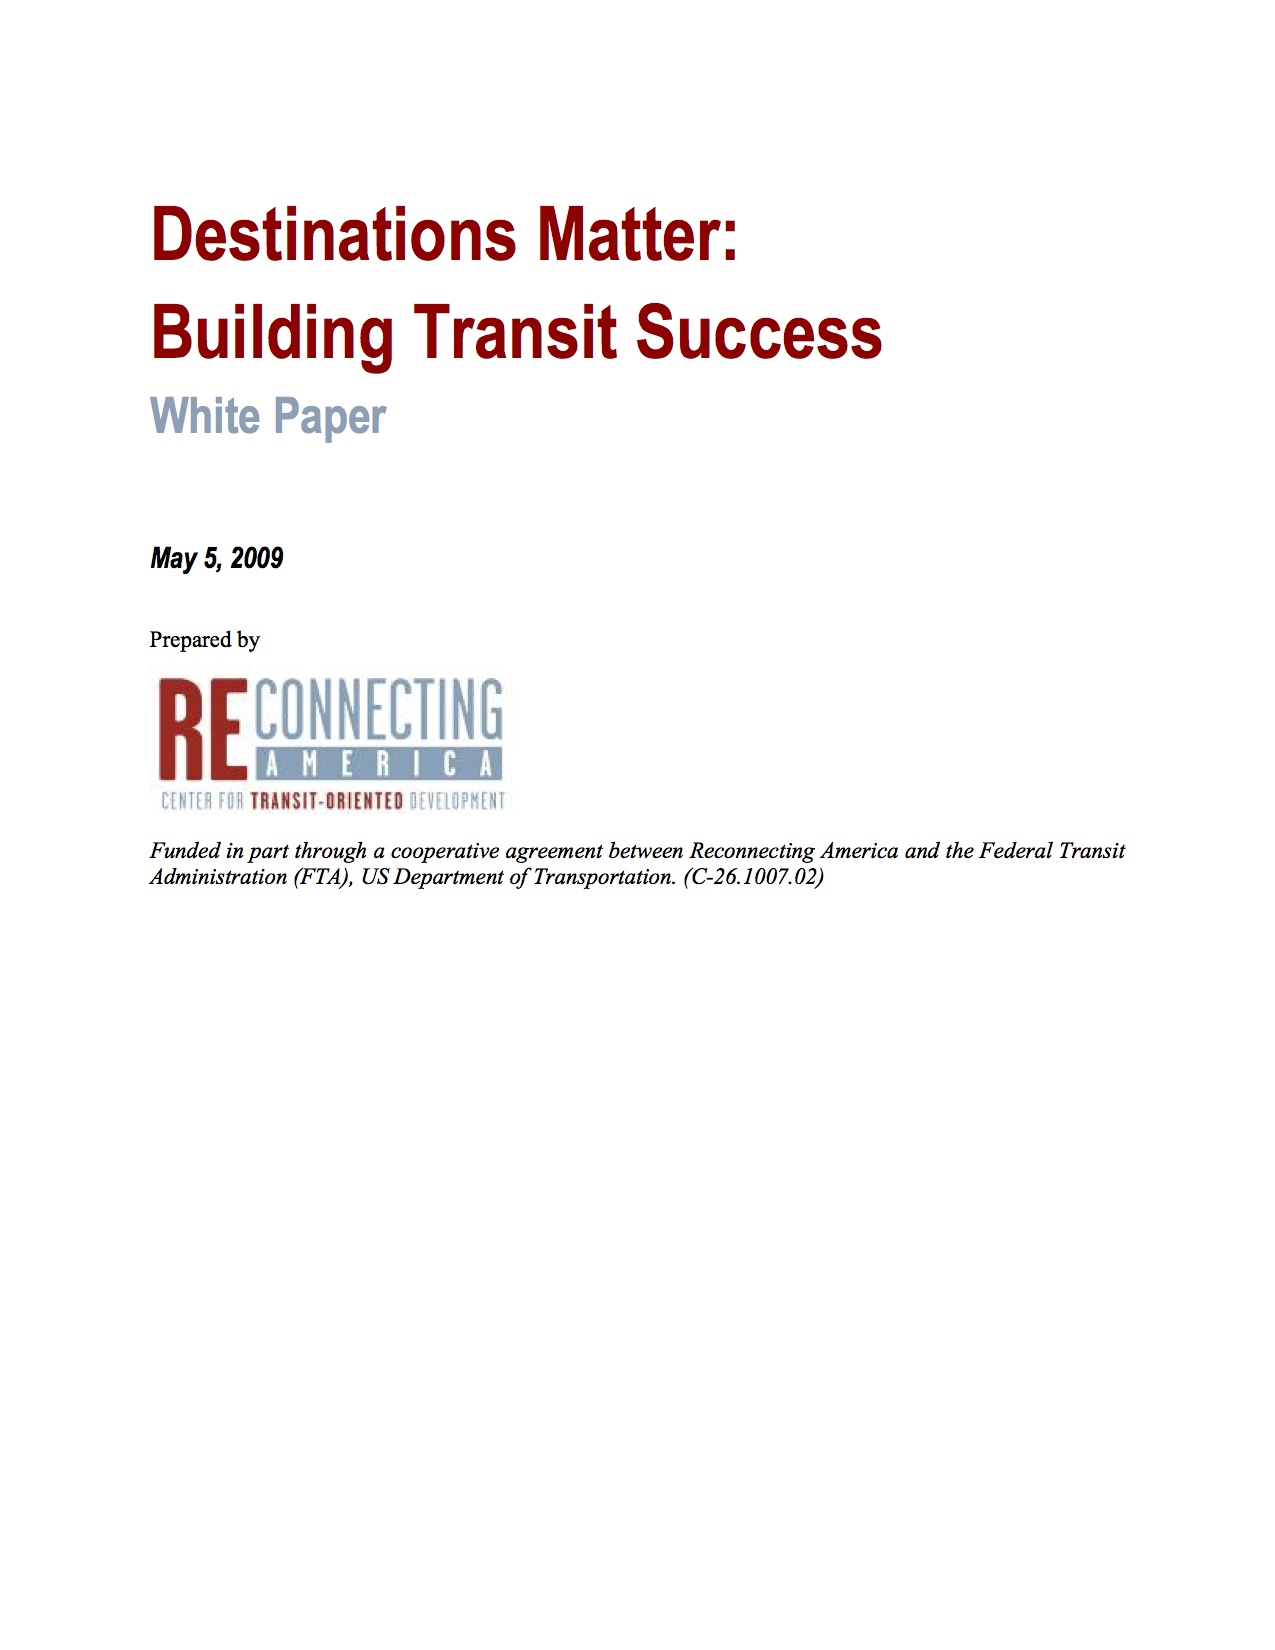 Destinations Matter: Building Transit Success